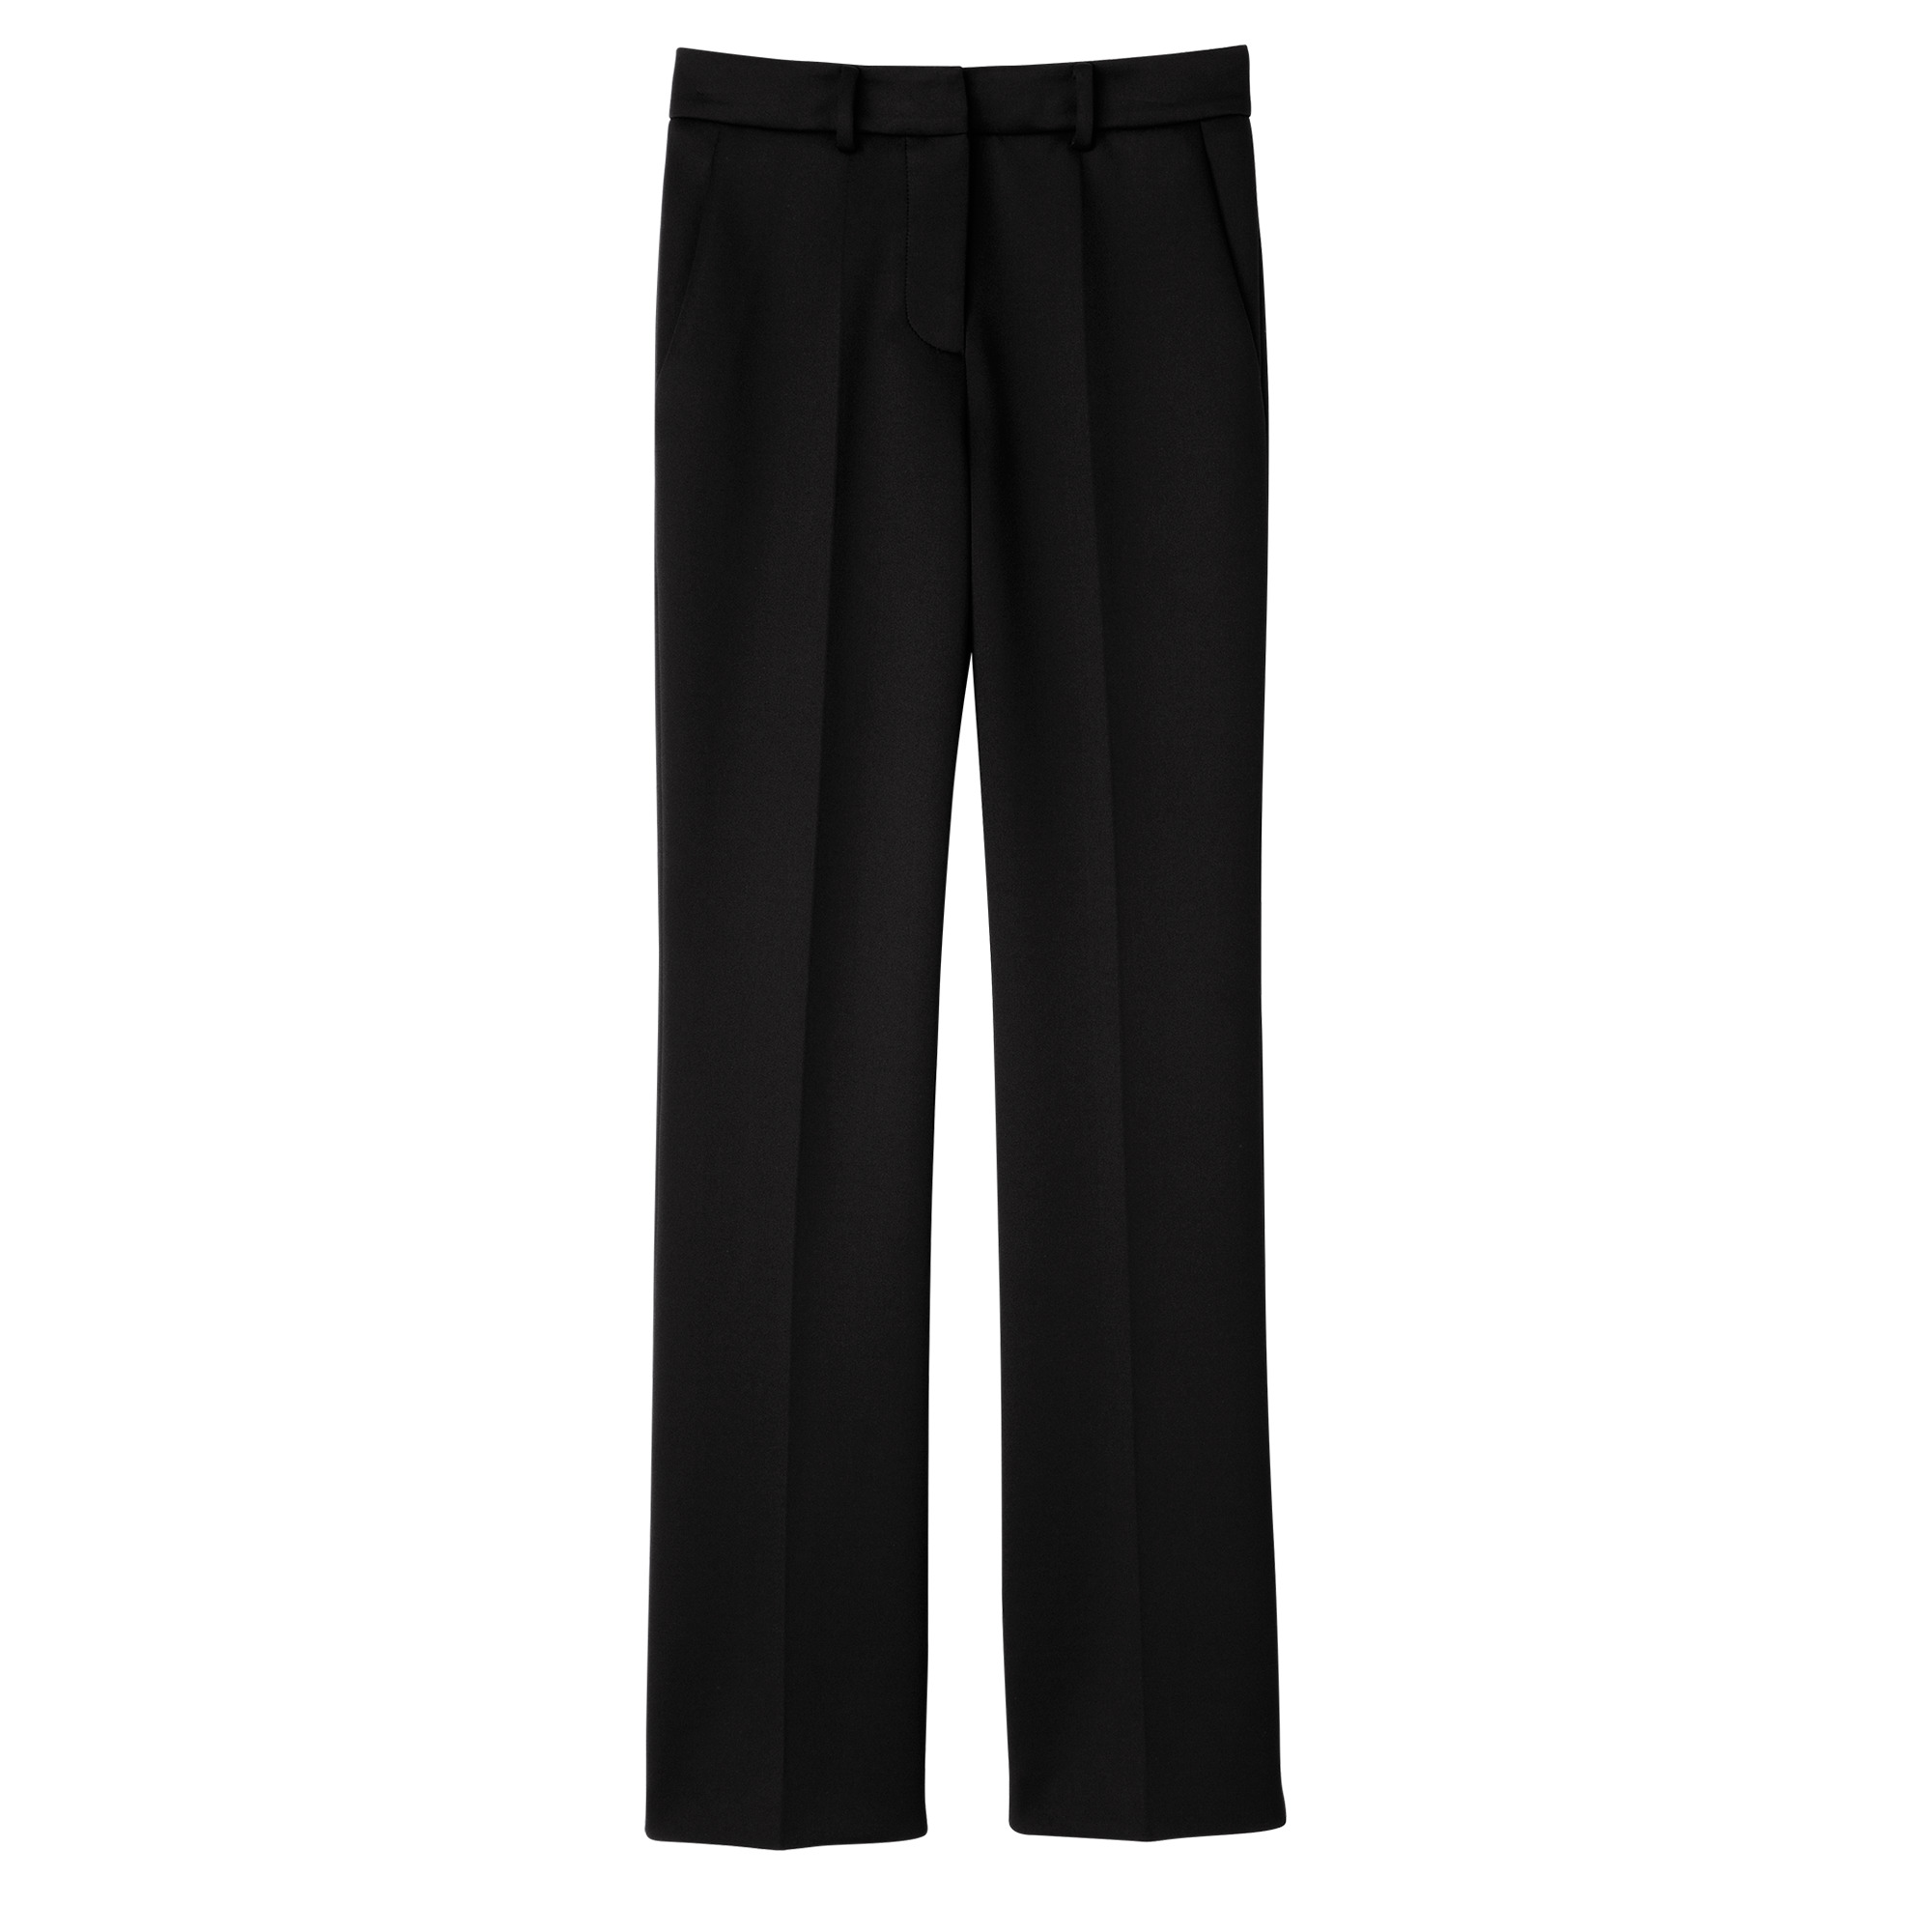 Trousers Black - Jersey - 1